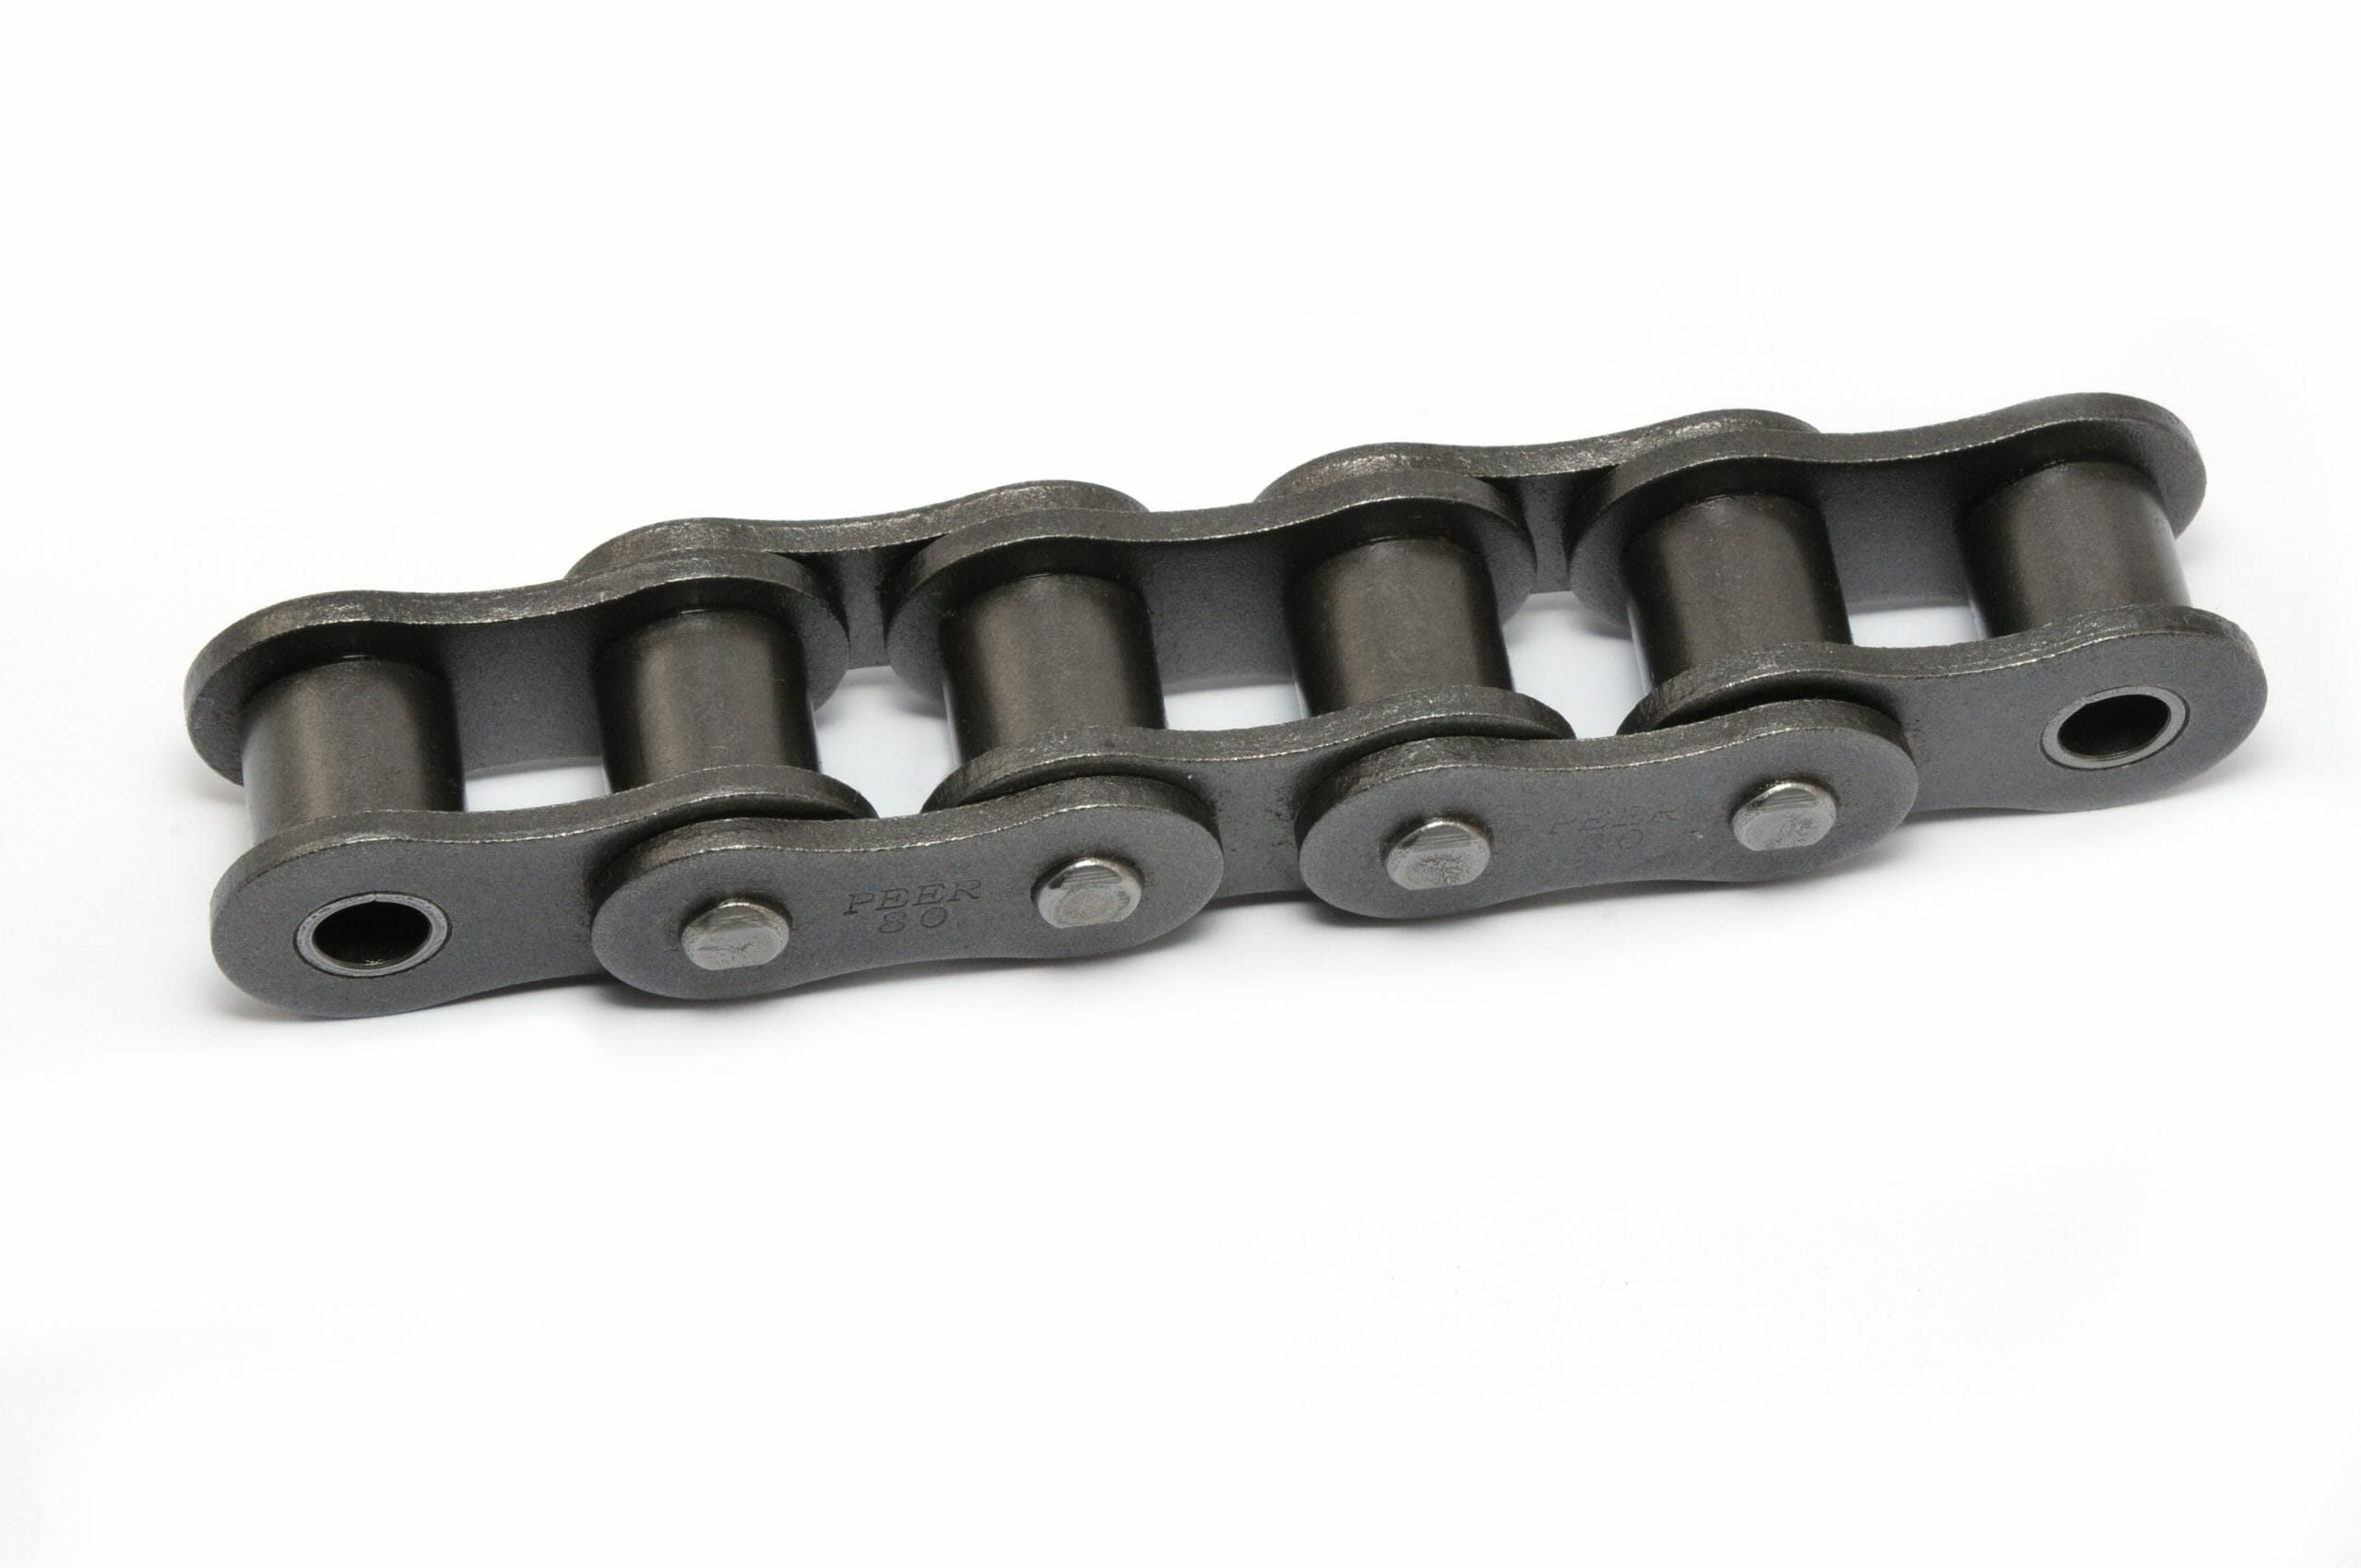 25 ANSI Standard Roller Chain | Size 25 Roller Chain